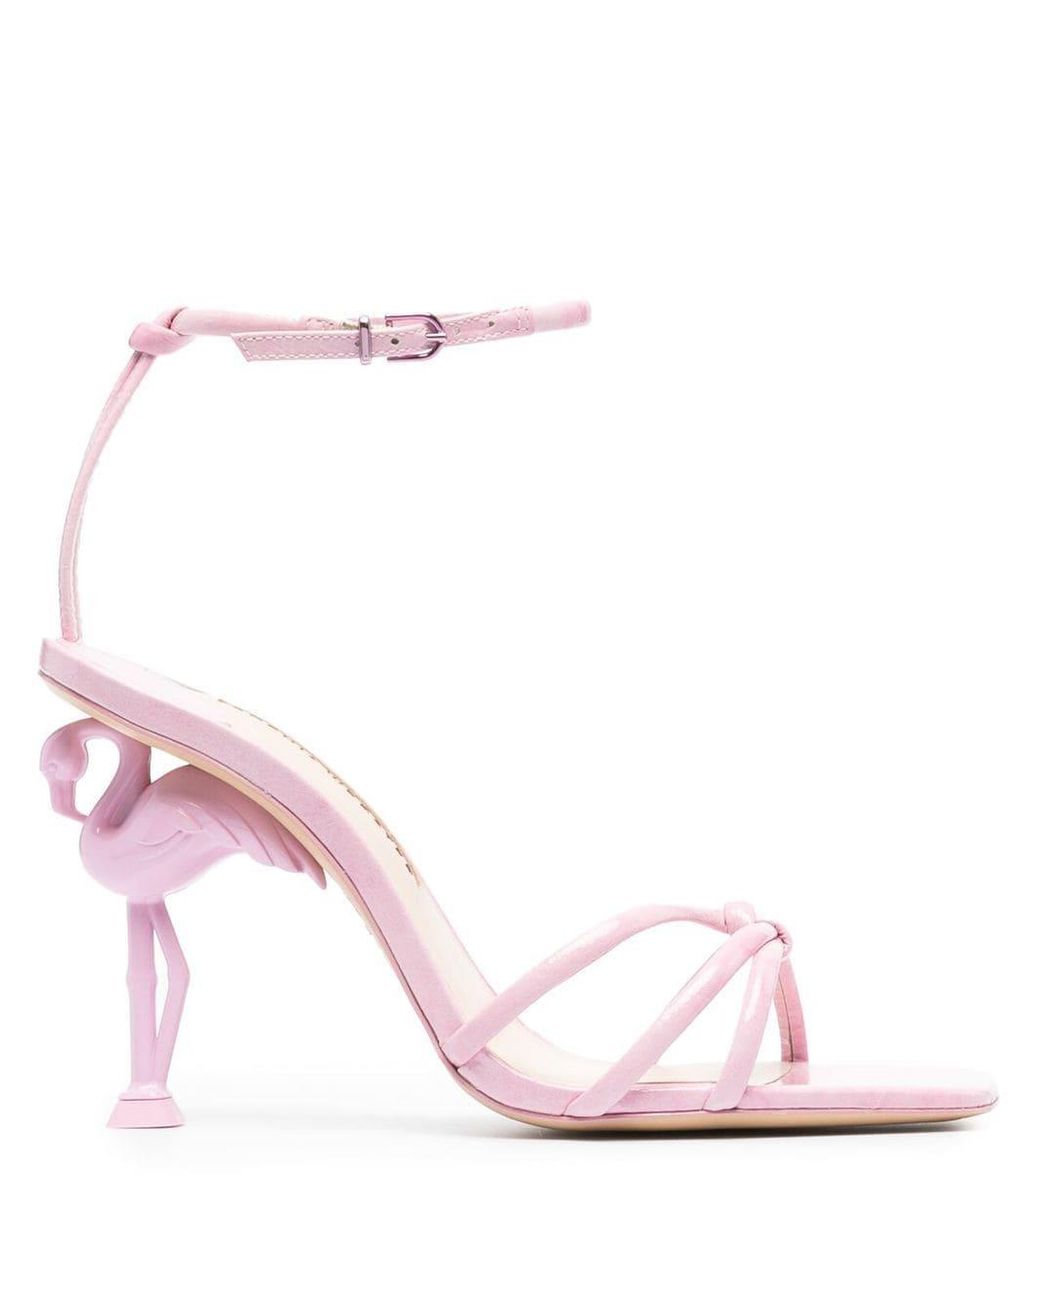 Sophia Webster Leather Flo Flamingo 100mm Sandals in Pink | Lyst